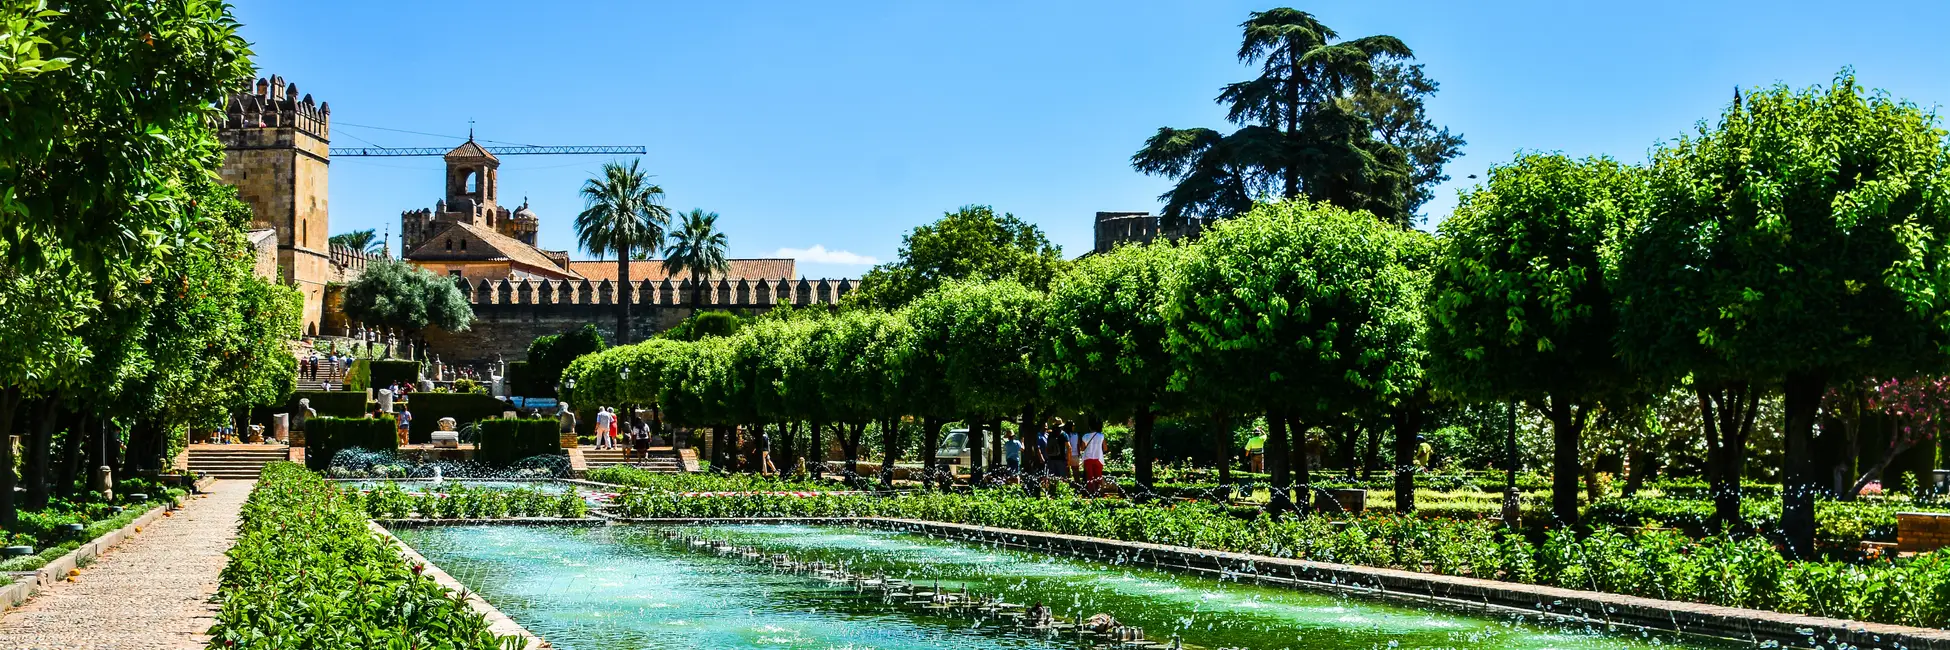 Bassin des jardins d'Alcazar 